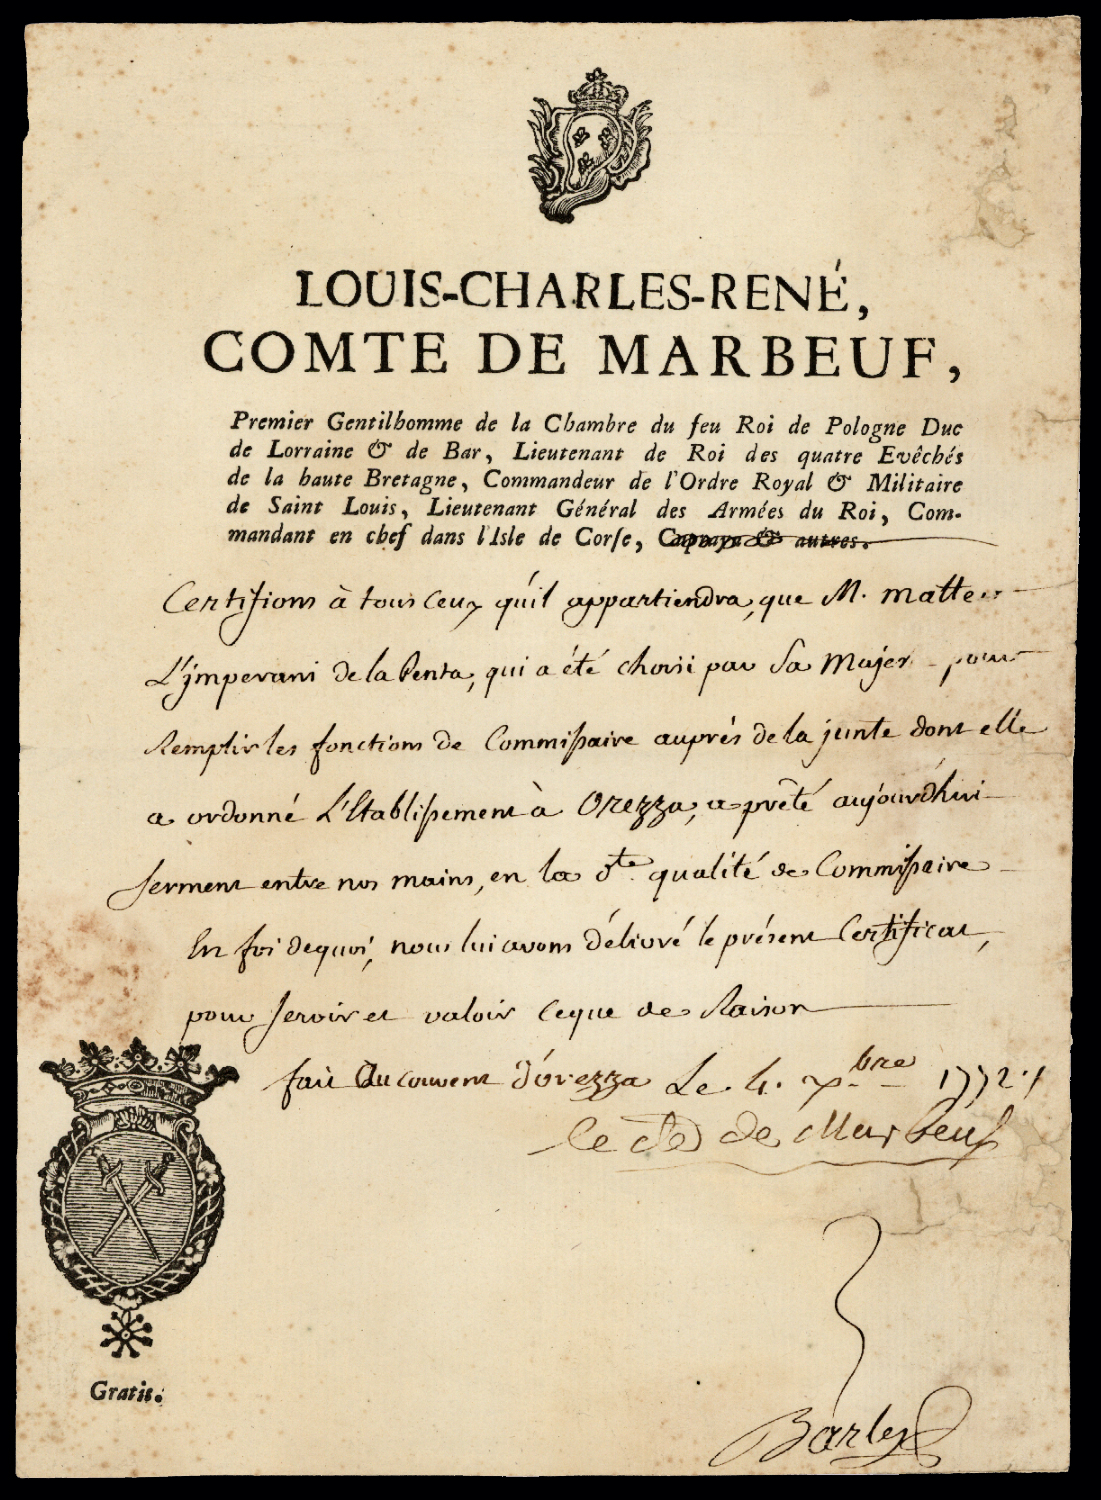 Referenz: marbeuf-charles-louis-rene-de-comte-de-marbeuf-commandant-de-l-isle-de-corse